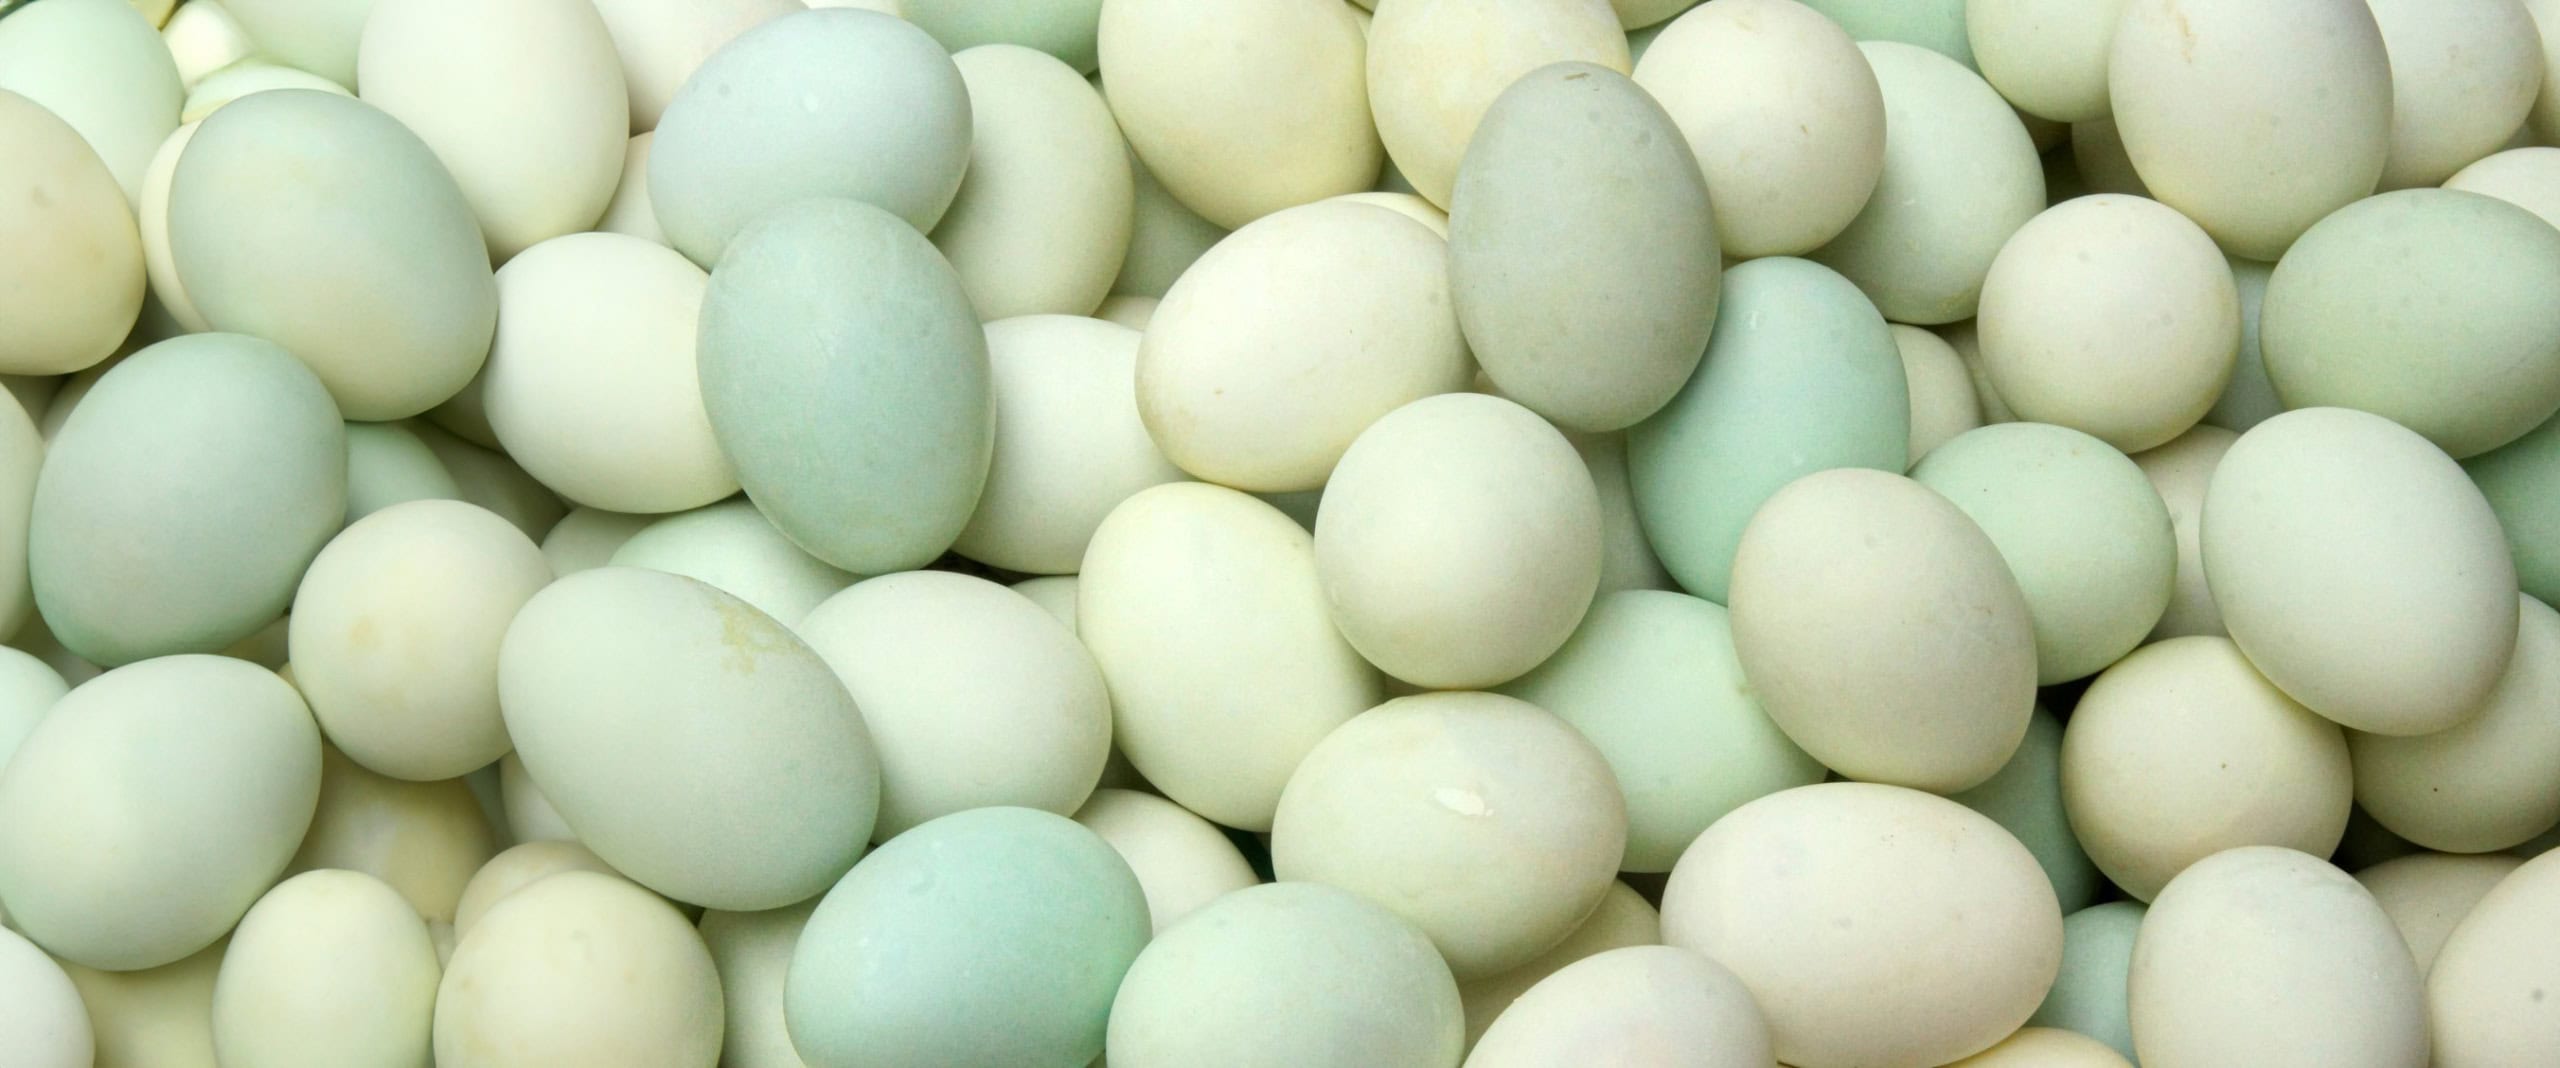 Eggs Unlimited Specialty eggs bulk wholesale Quail Eggs, Duck Eggs, Blue heirloom eggs (3)